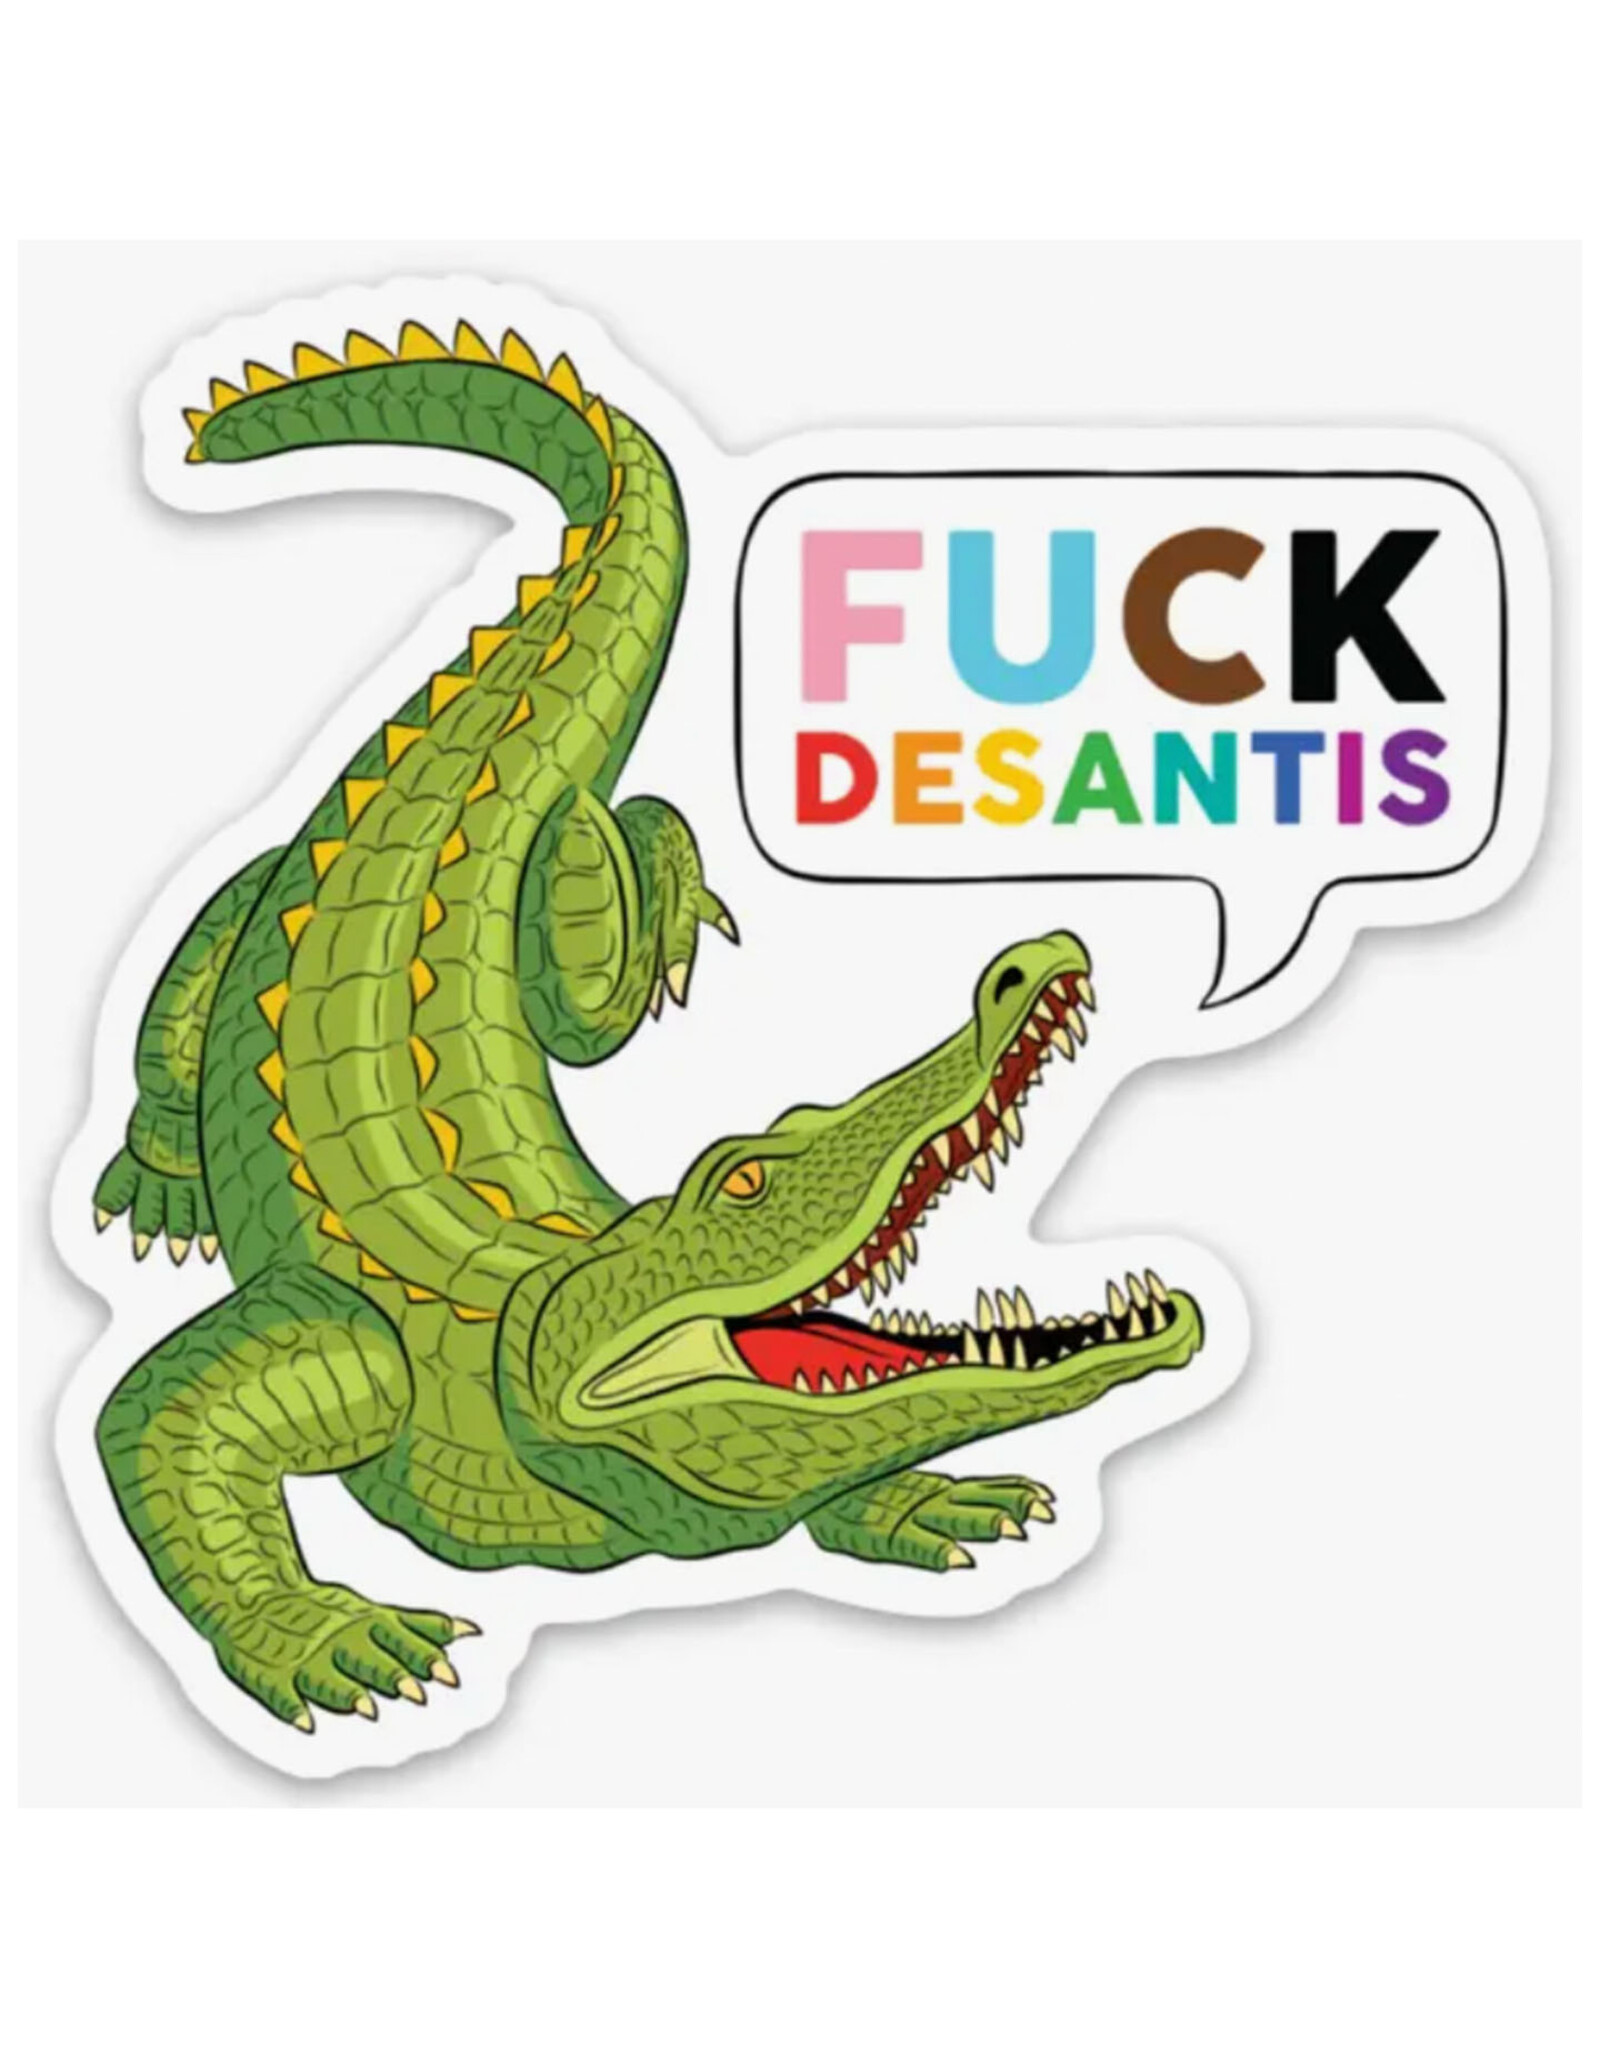 Fuck DeSantis Sticker